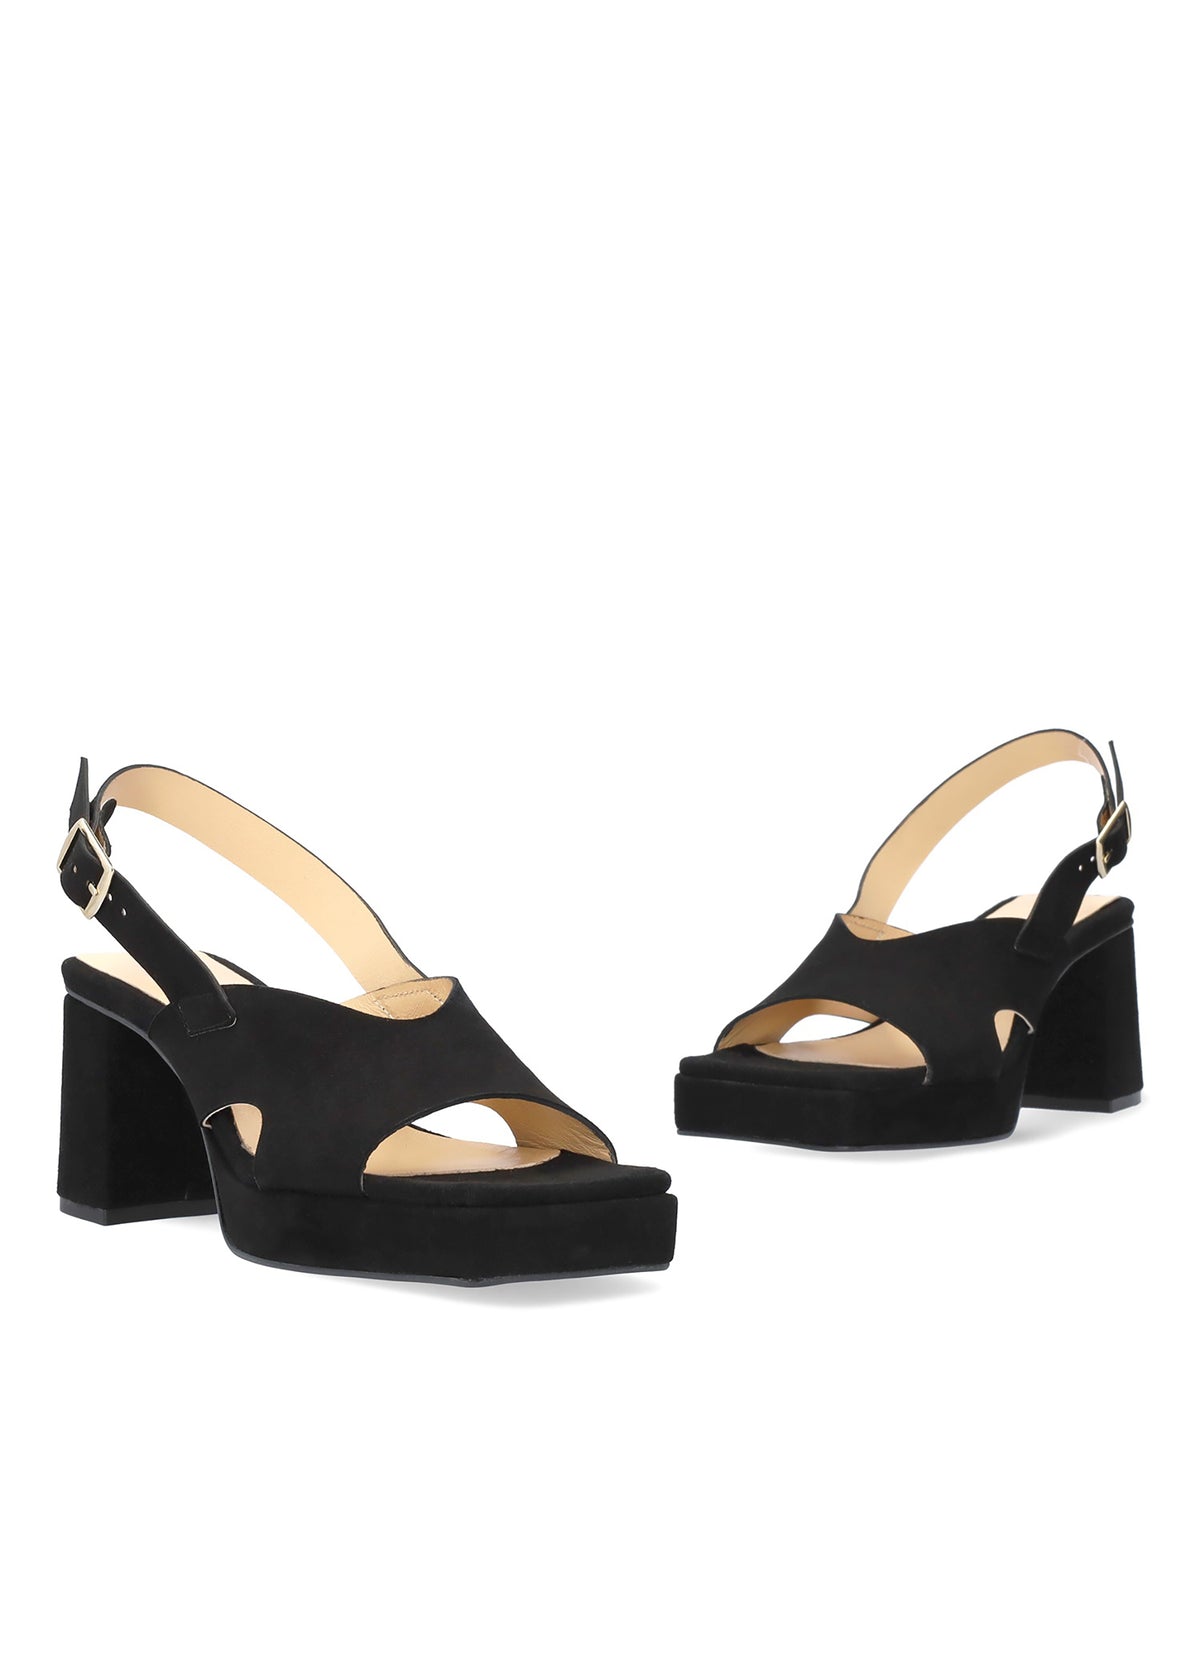 Sandals with stiletto heel and platform sole - Rita, black nubuck leather